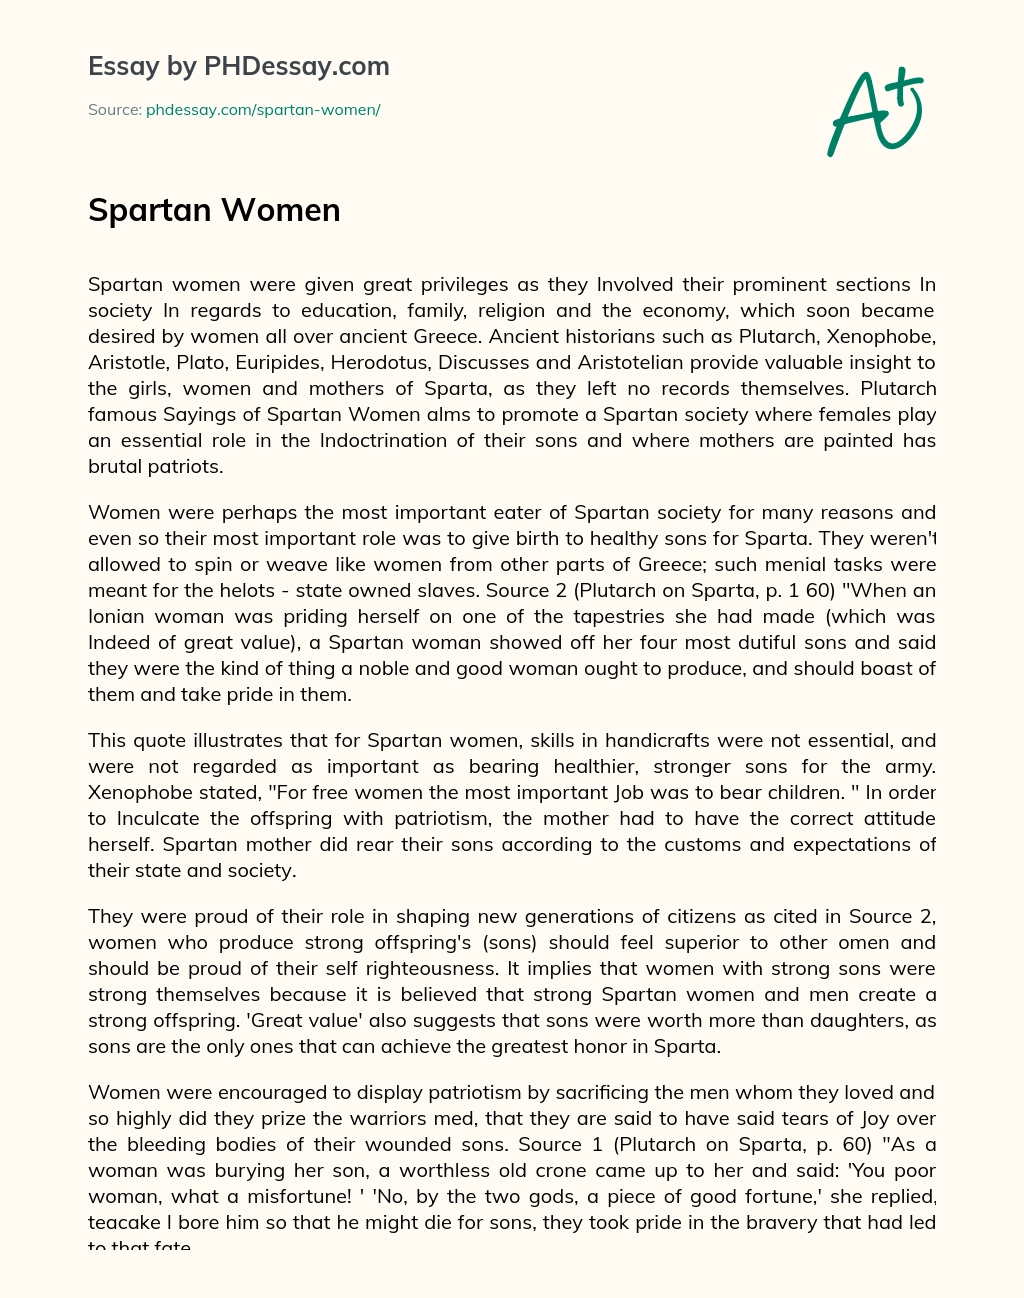 Spartan Women essay